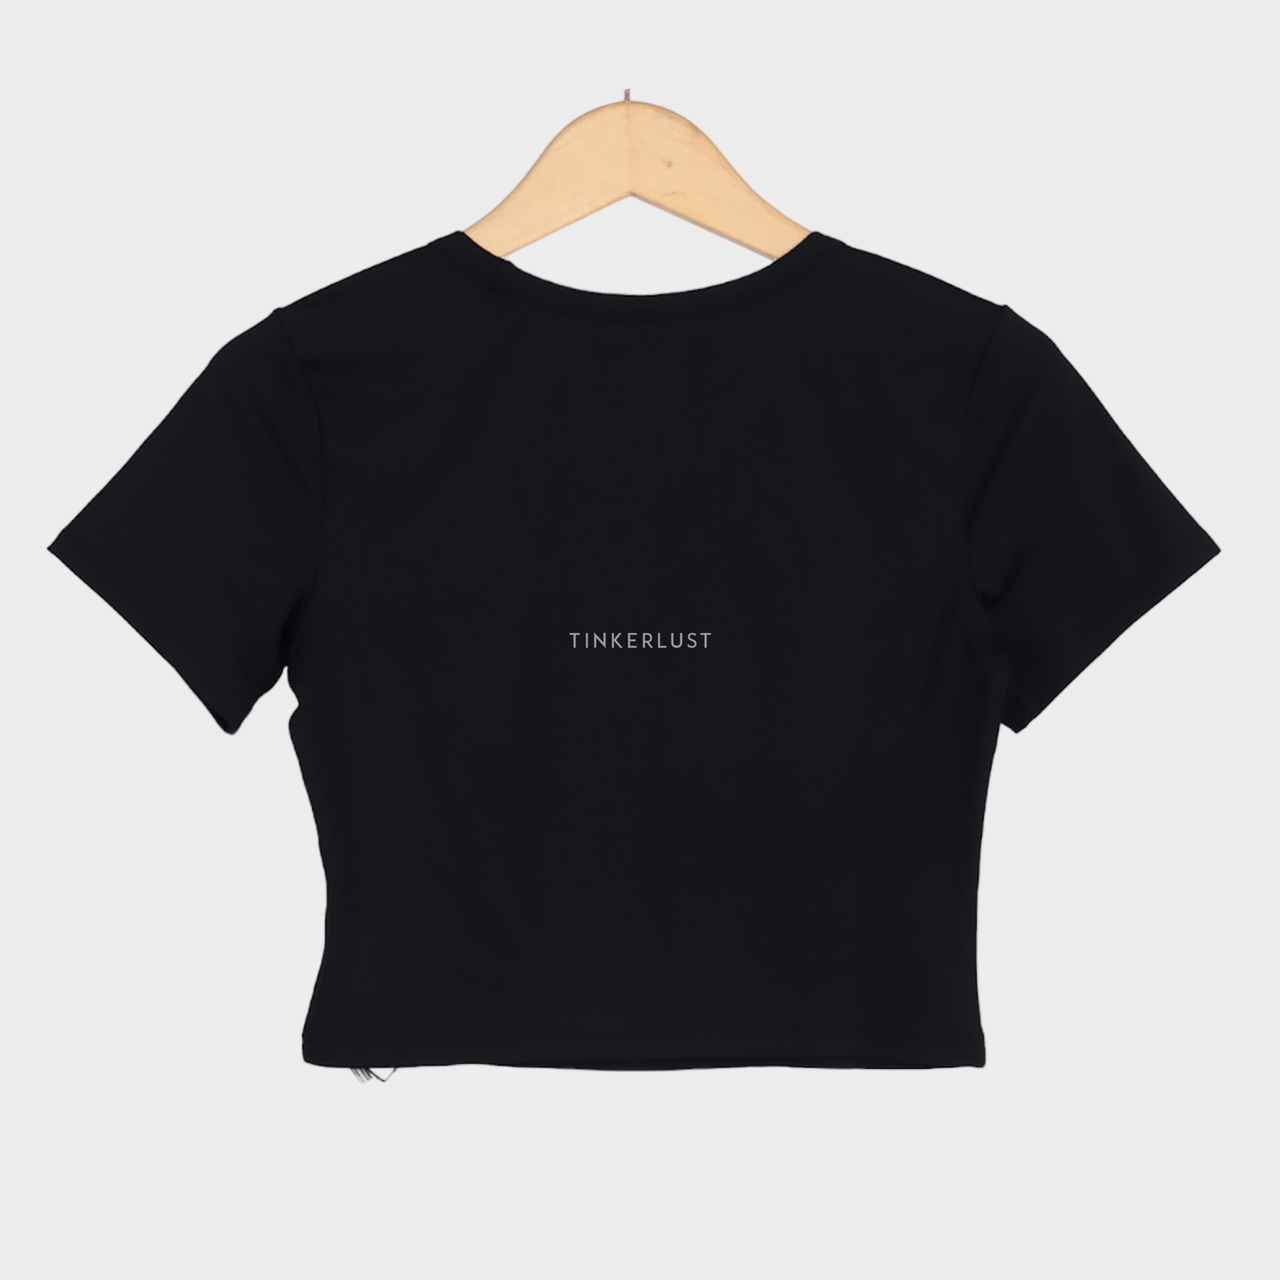 H&M Black T-Shirt